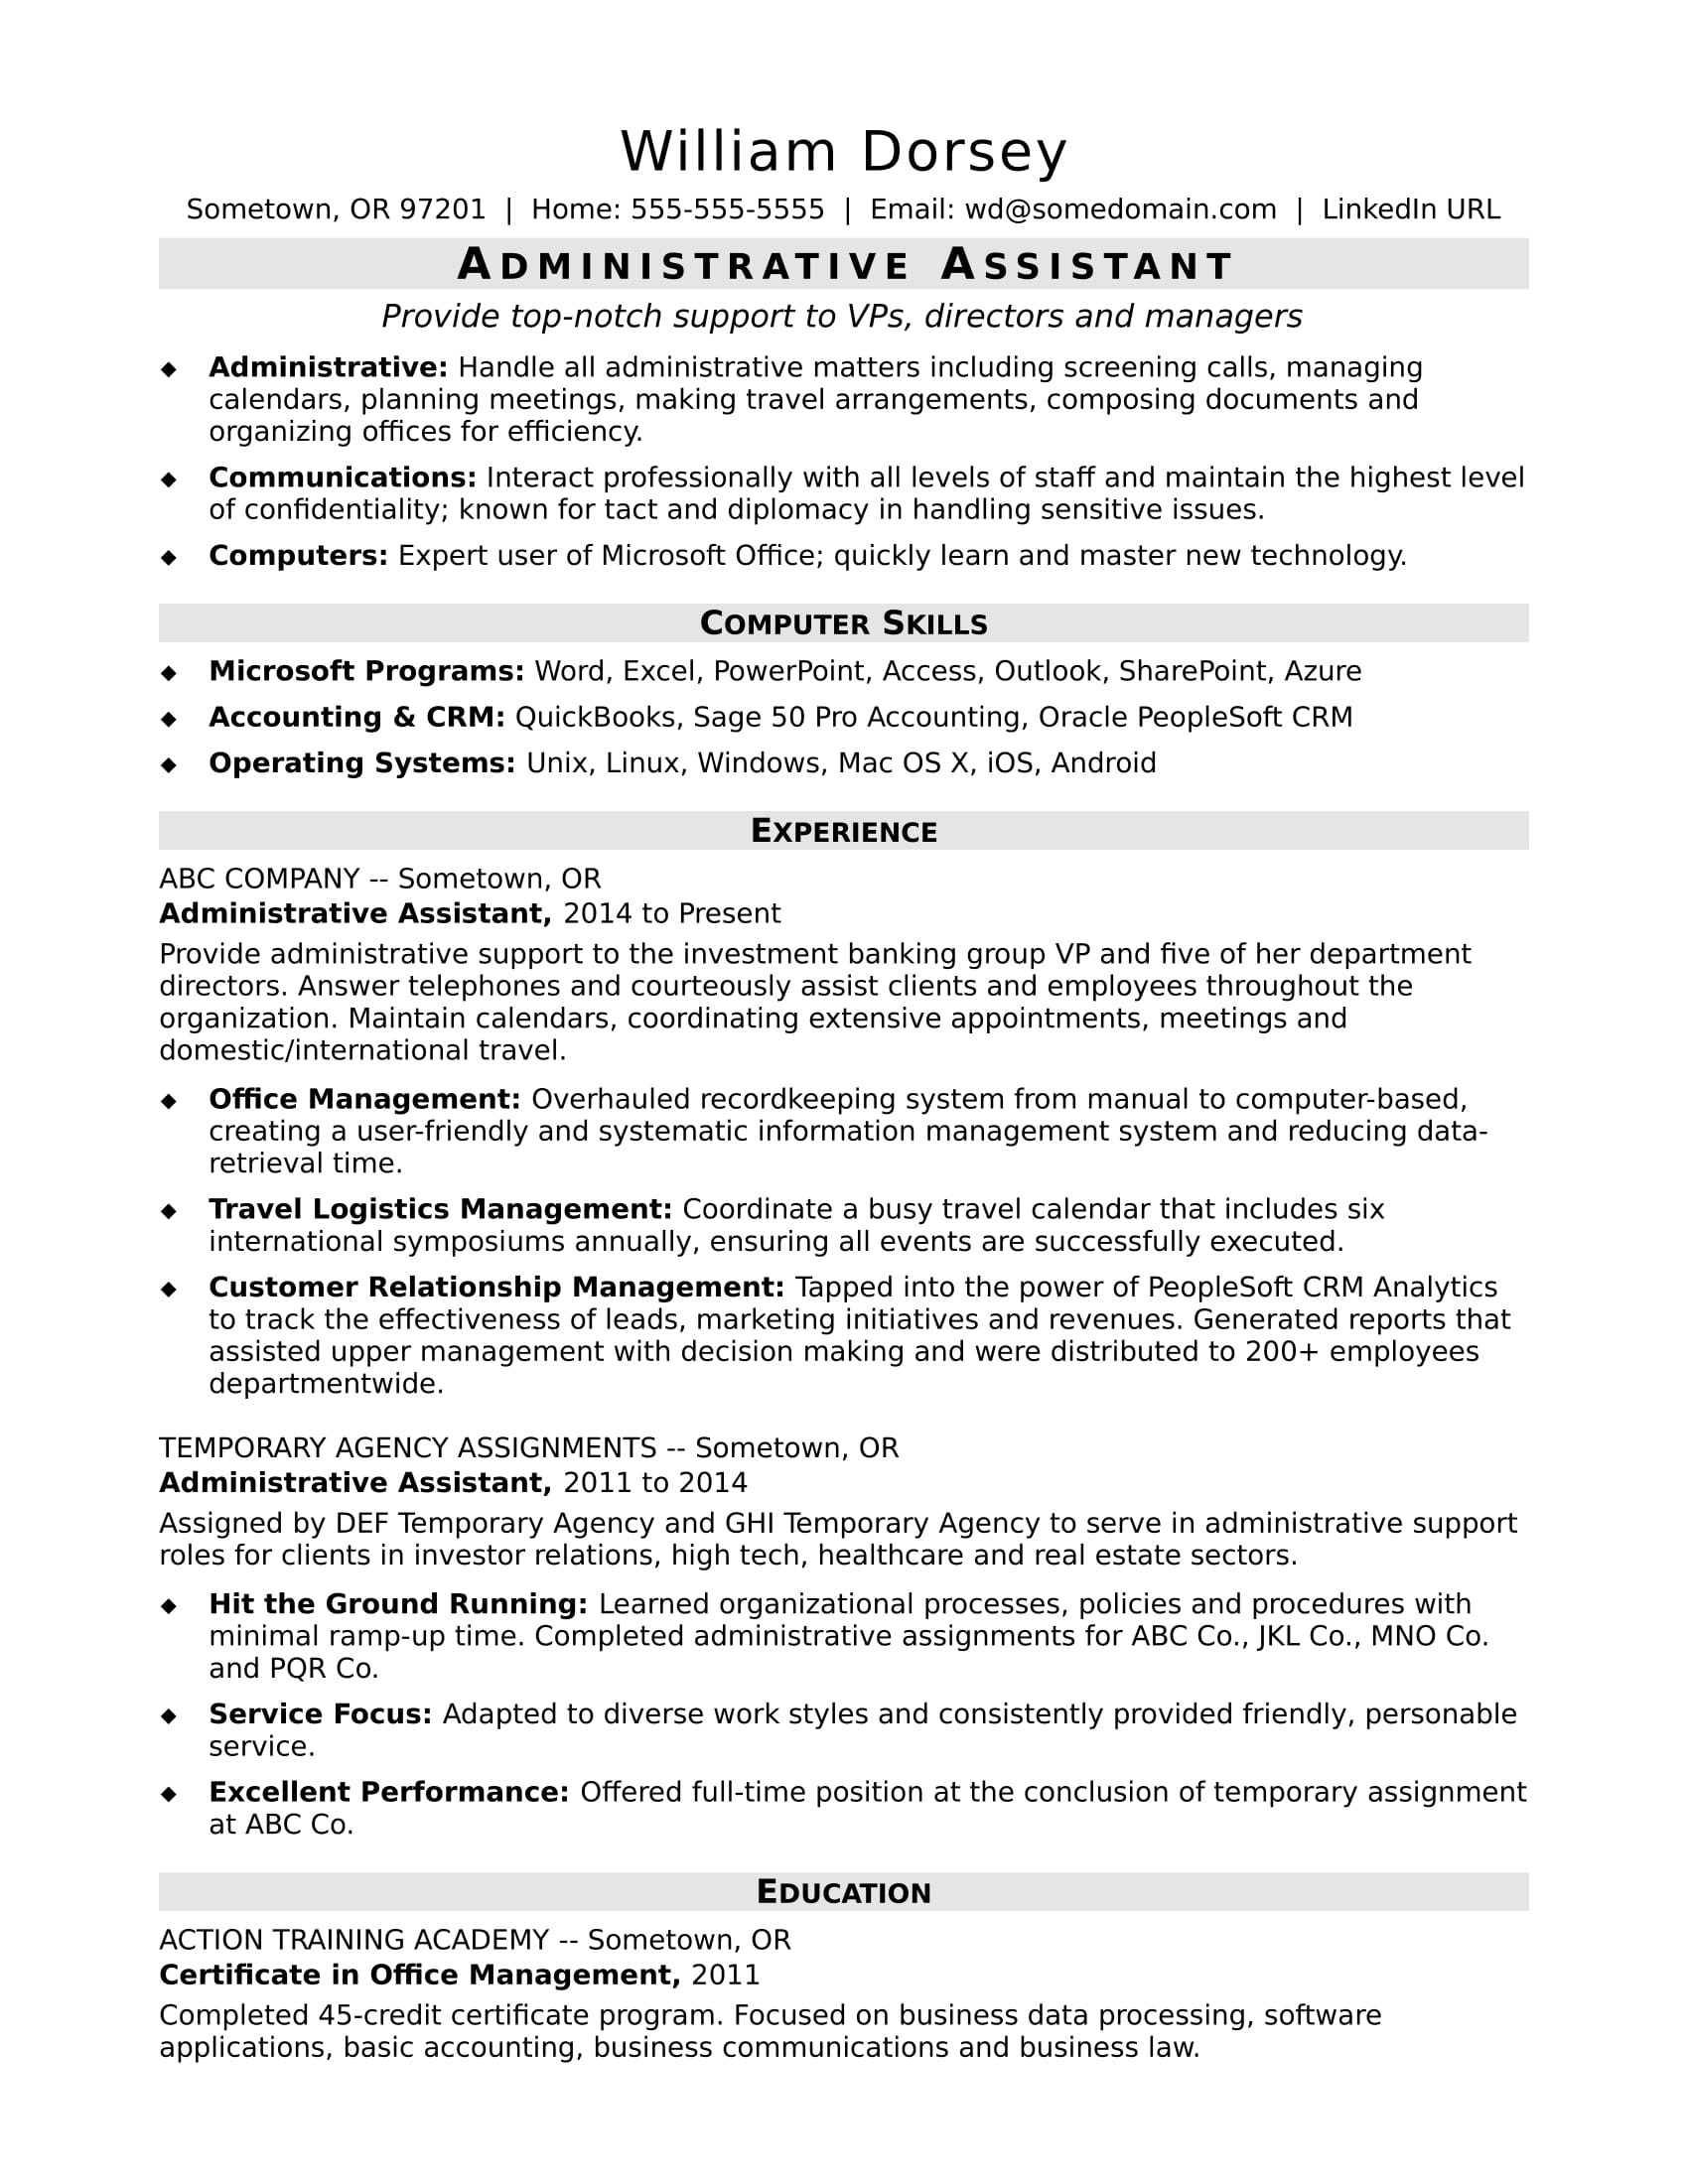 Sample Resume Templates for Administrative assistant Midlevel Administrative assistant Resume Sample Monster.com